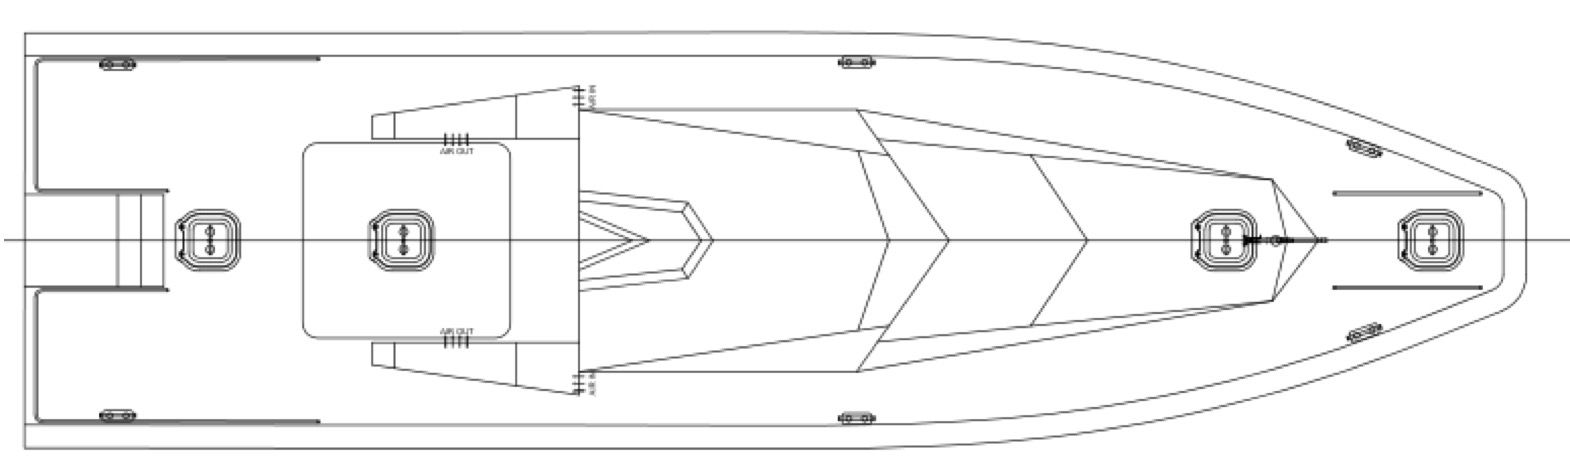 1720: NEW BUILD - 19.5m Fast Stealth Patrol Boat - 091.jpg